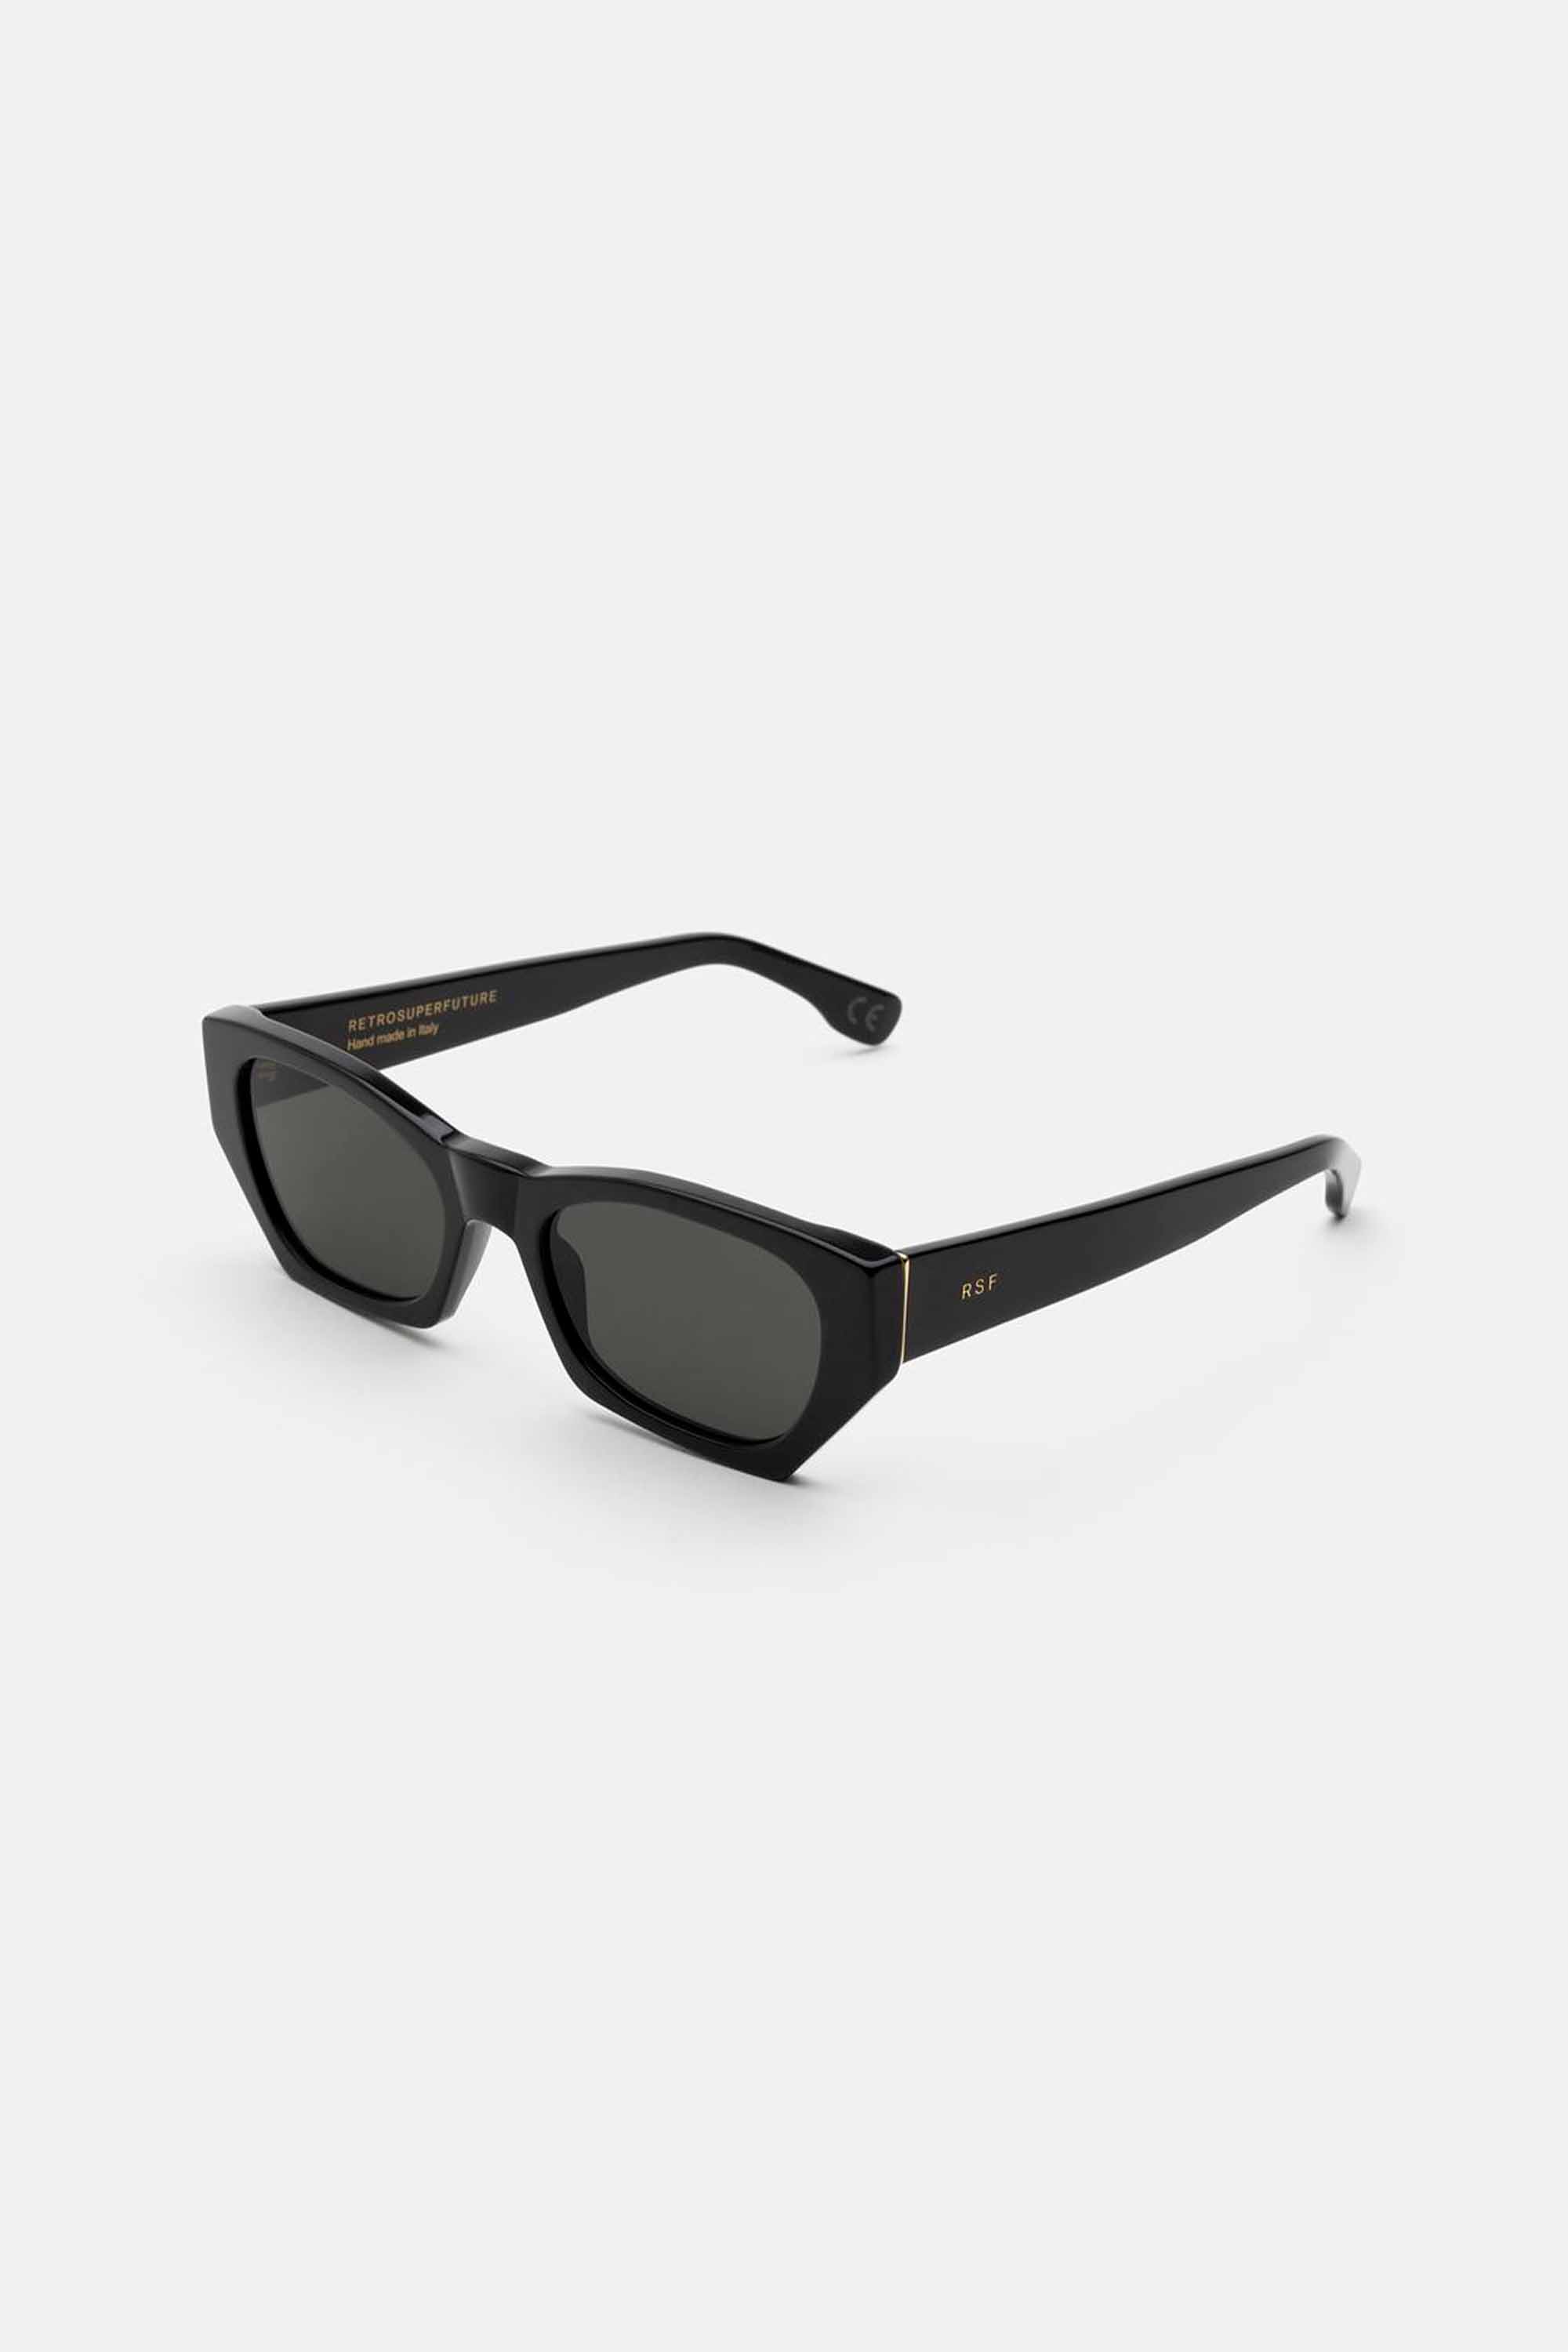 Retrosuperfuture amata black sunglasses - Eyewear Club